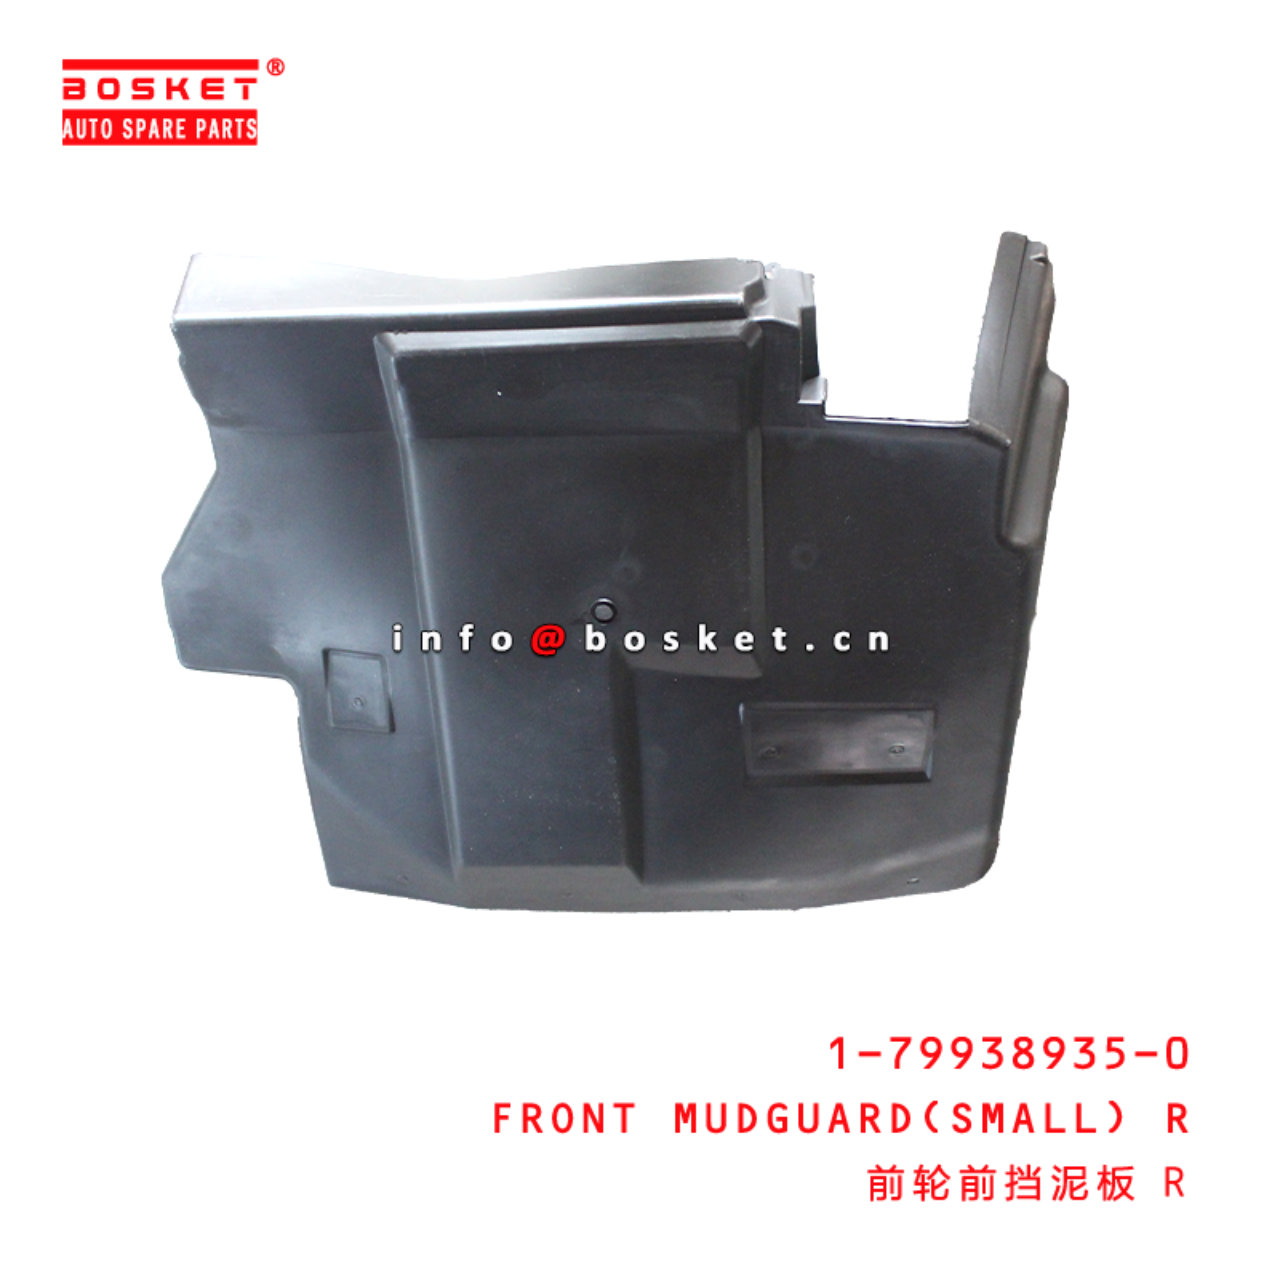 1-79938935-0 Front Mudguard(Small) R Suitable for ISUZU FRR FSR FTR  1799389350